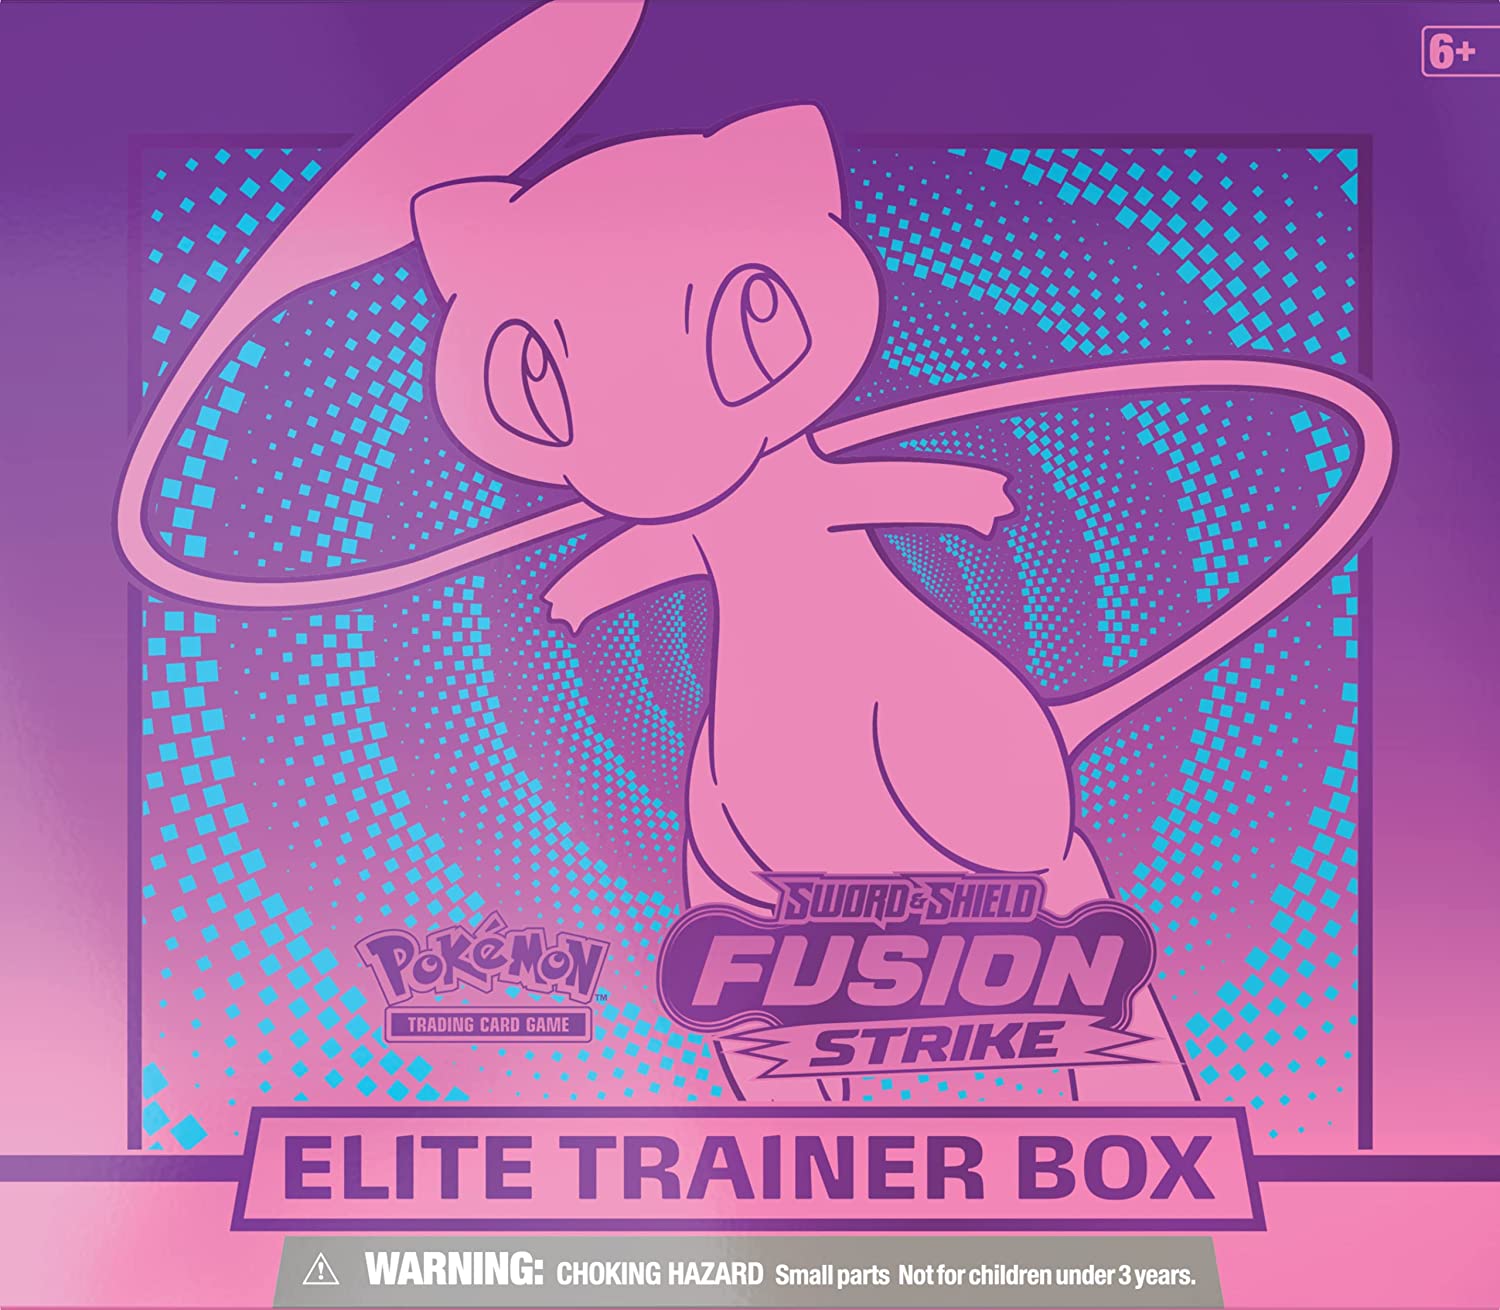 Fusion Strike Elite Trainer Boxes & Cases